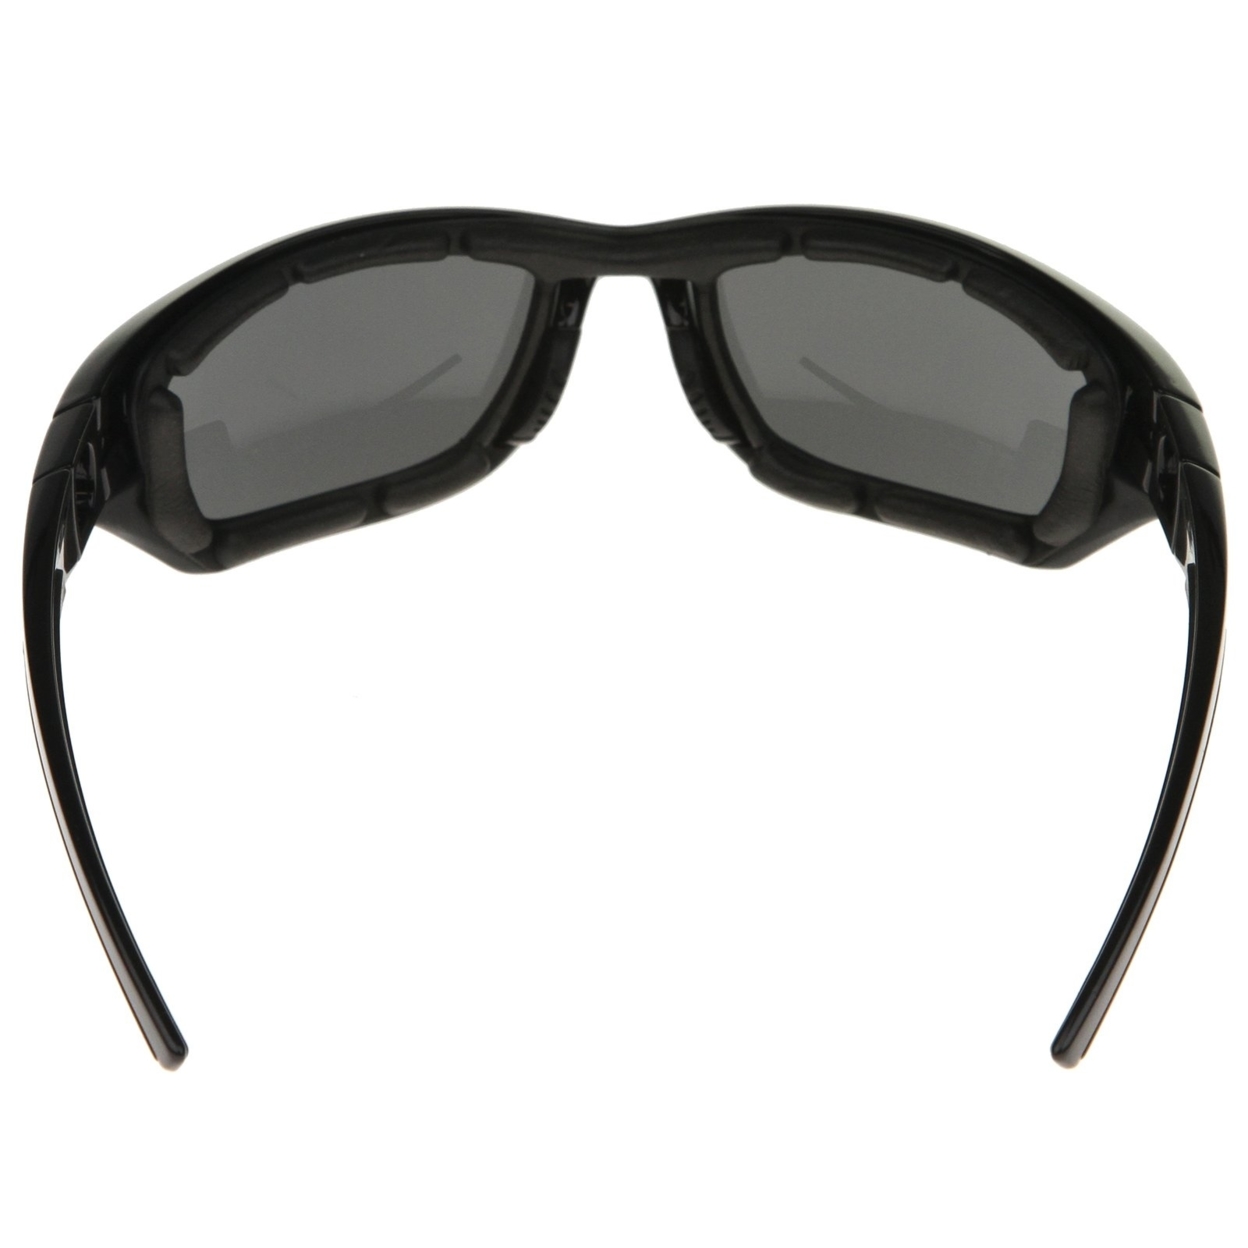 Vinson - Extreme Sports Removable Padding TR-90 Goggles 70mm - Black-Black / Smoke